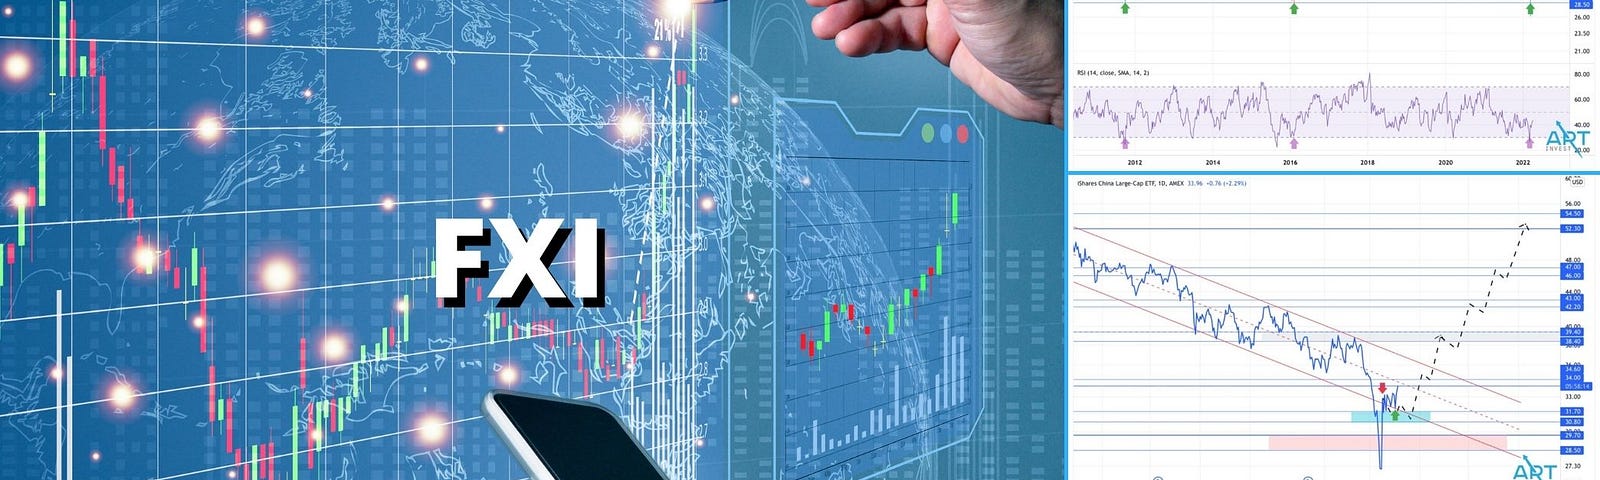 FXI price chart technical analysis